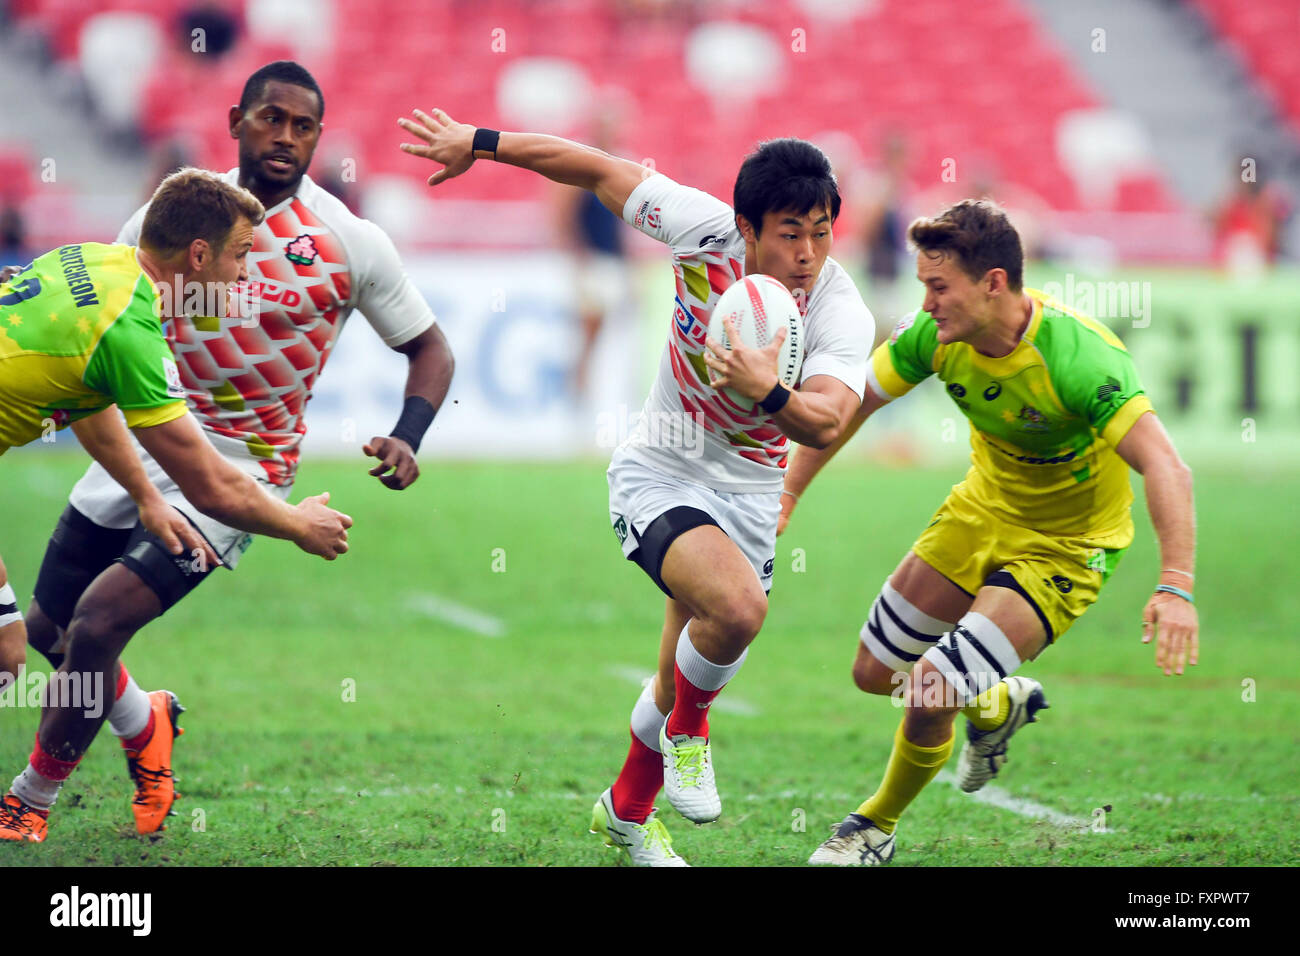 Kenki Fukuoka (JPN), APRL 16, 2016 - Rugby : HSBC Sevens World Series, Singapore Sevens match Japan and Australia at National Stadium in Singapore. (Photo by Haruhiko Otsuka/AFLO) Stock Photo